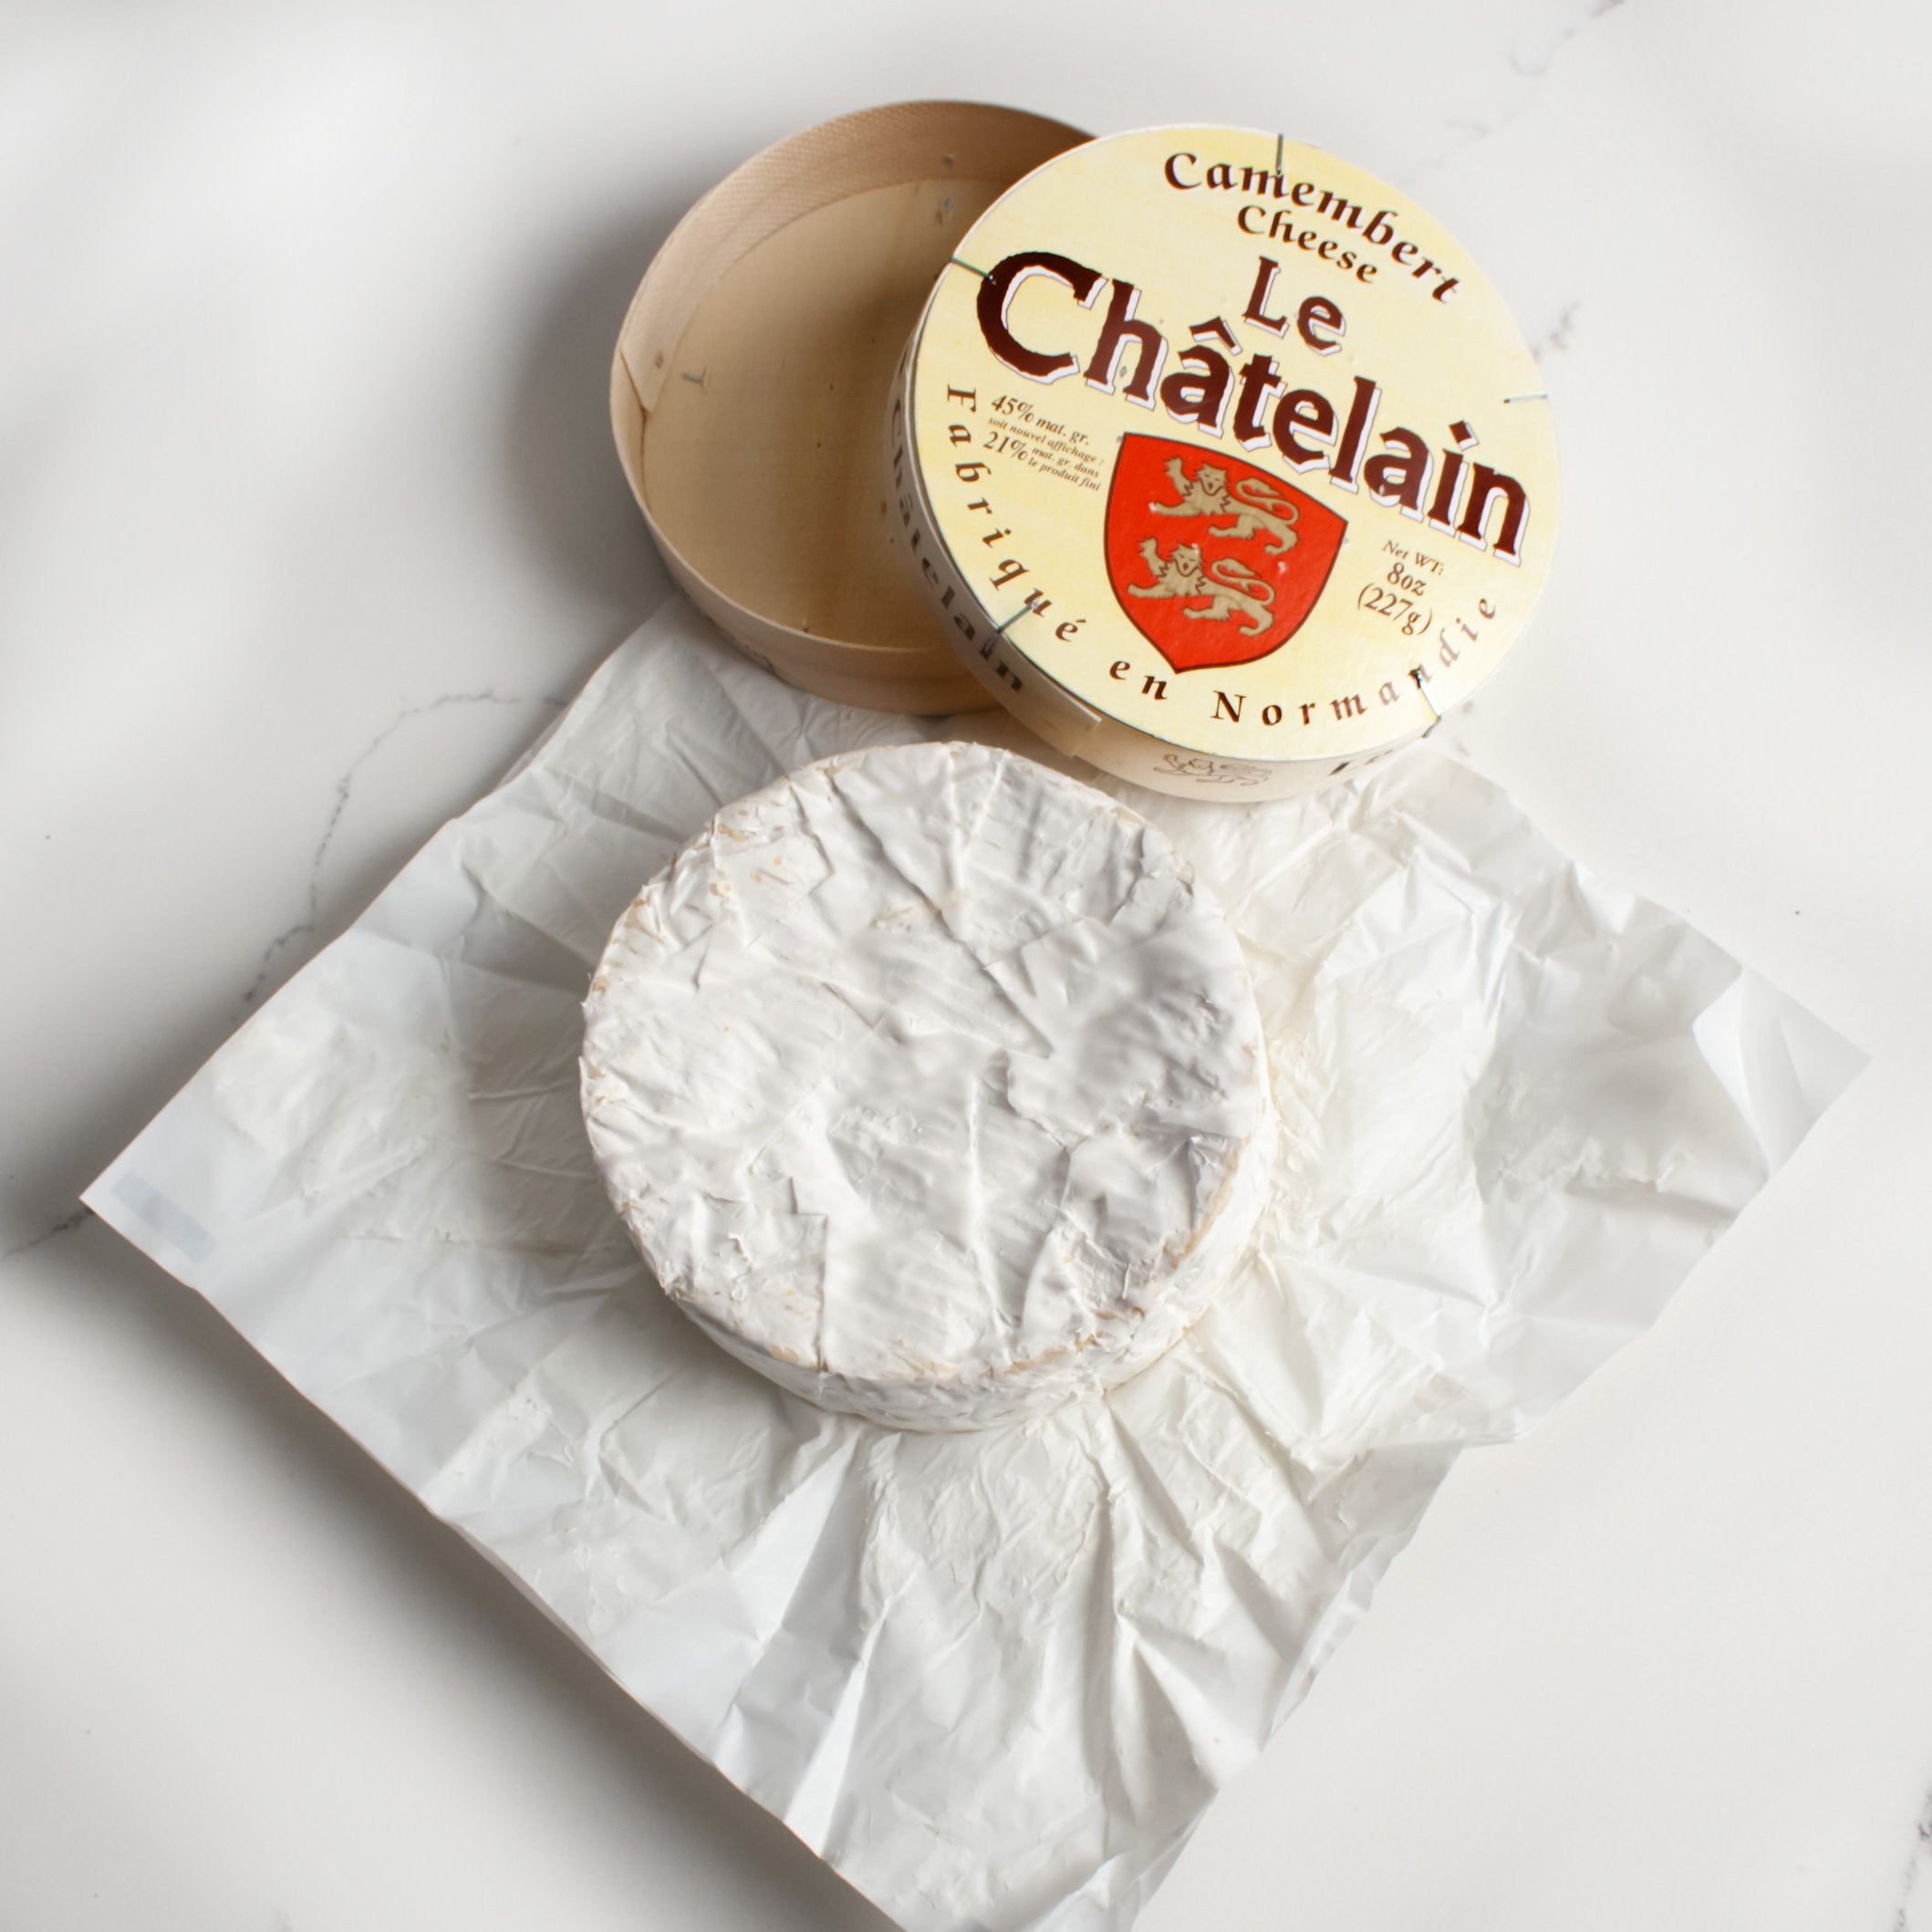 Camembert Le Chatelain - igourmet